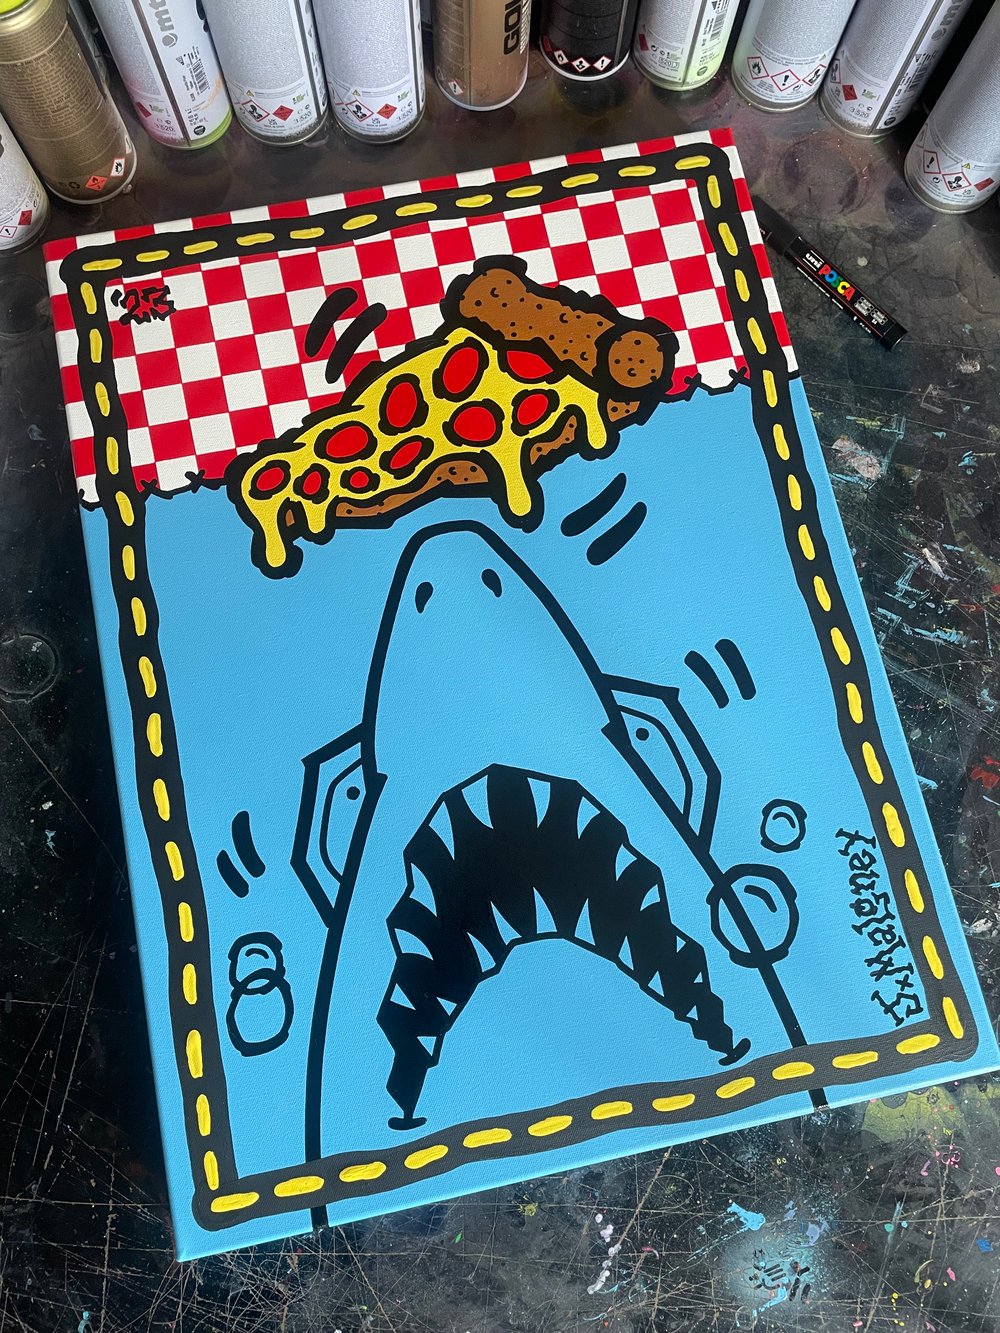 Original Pizza Shark Painting!